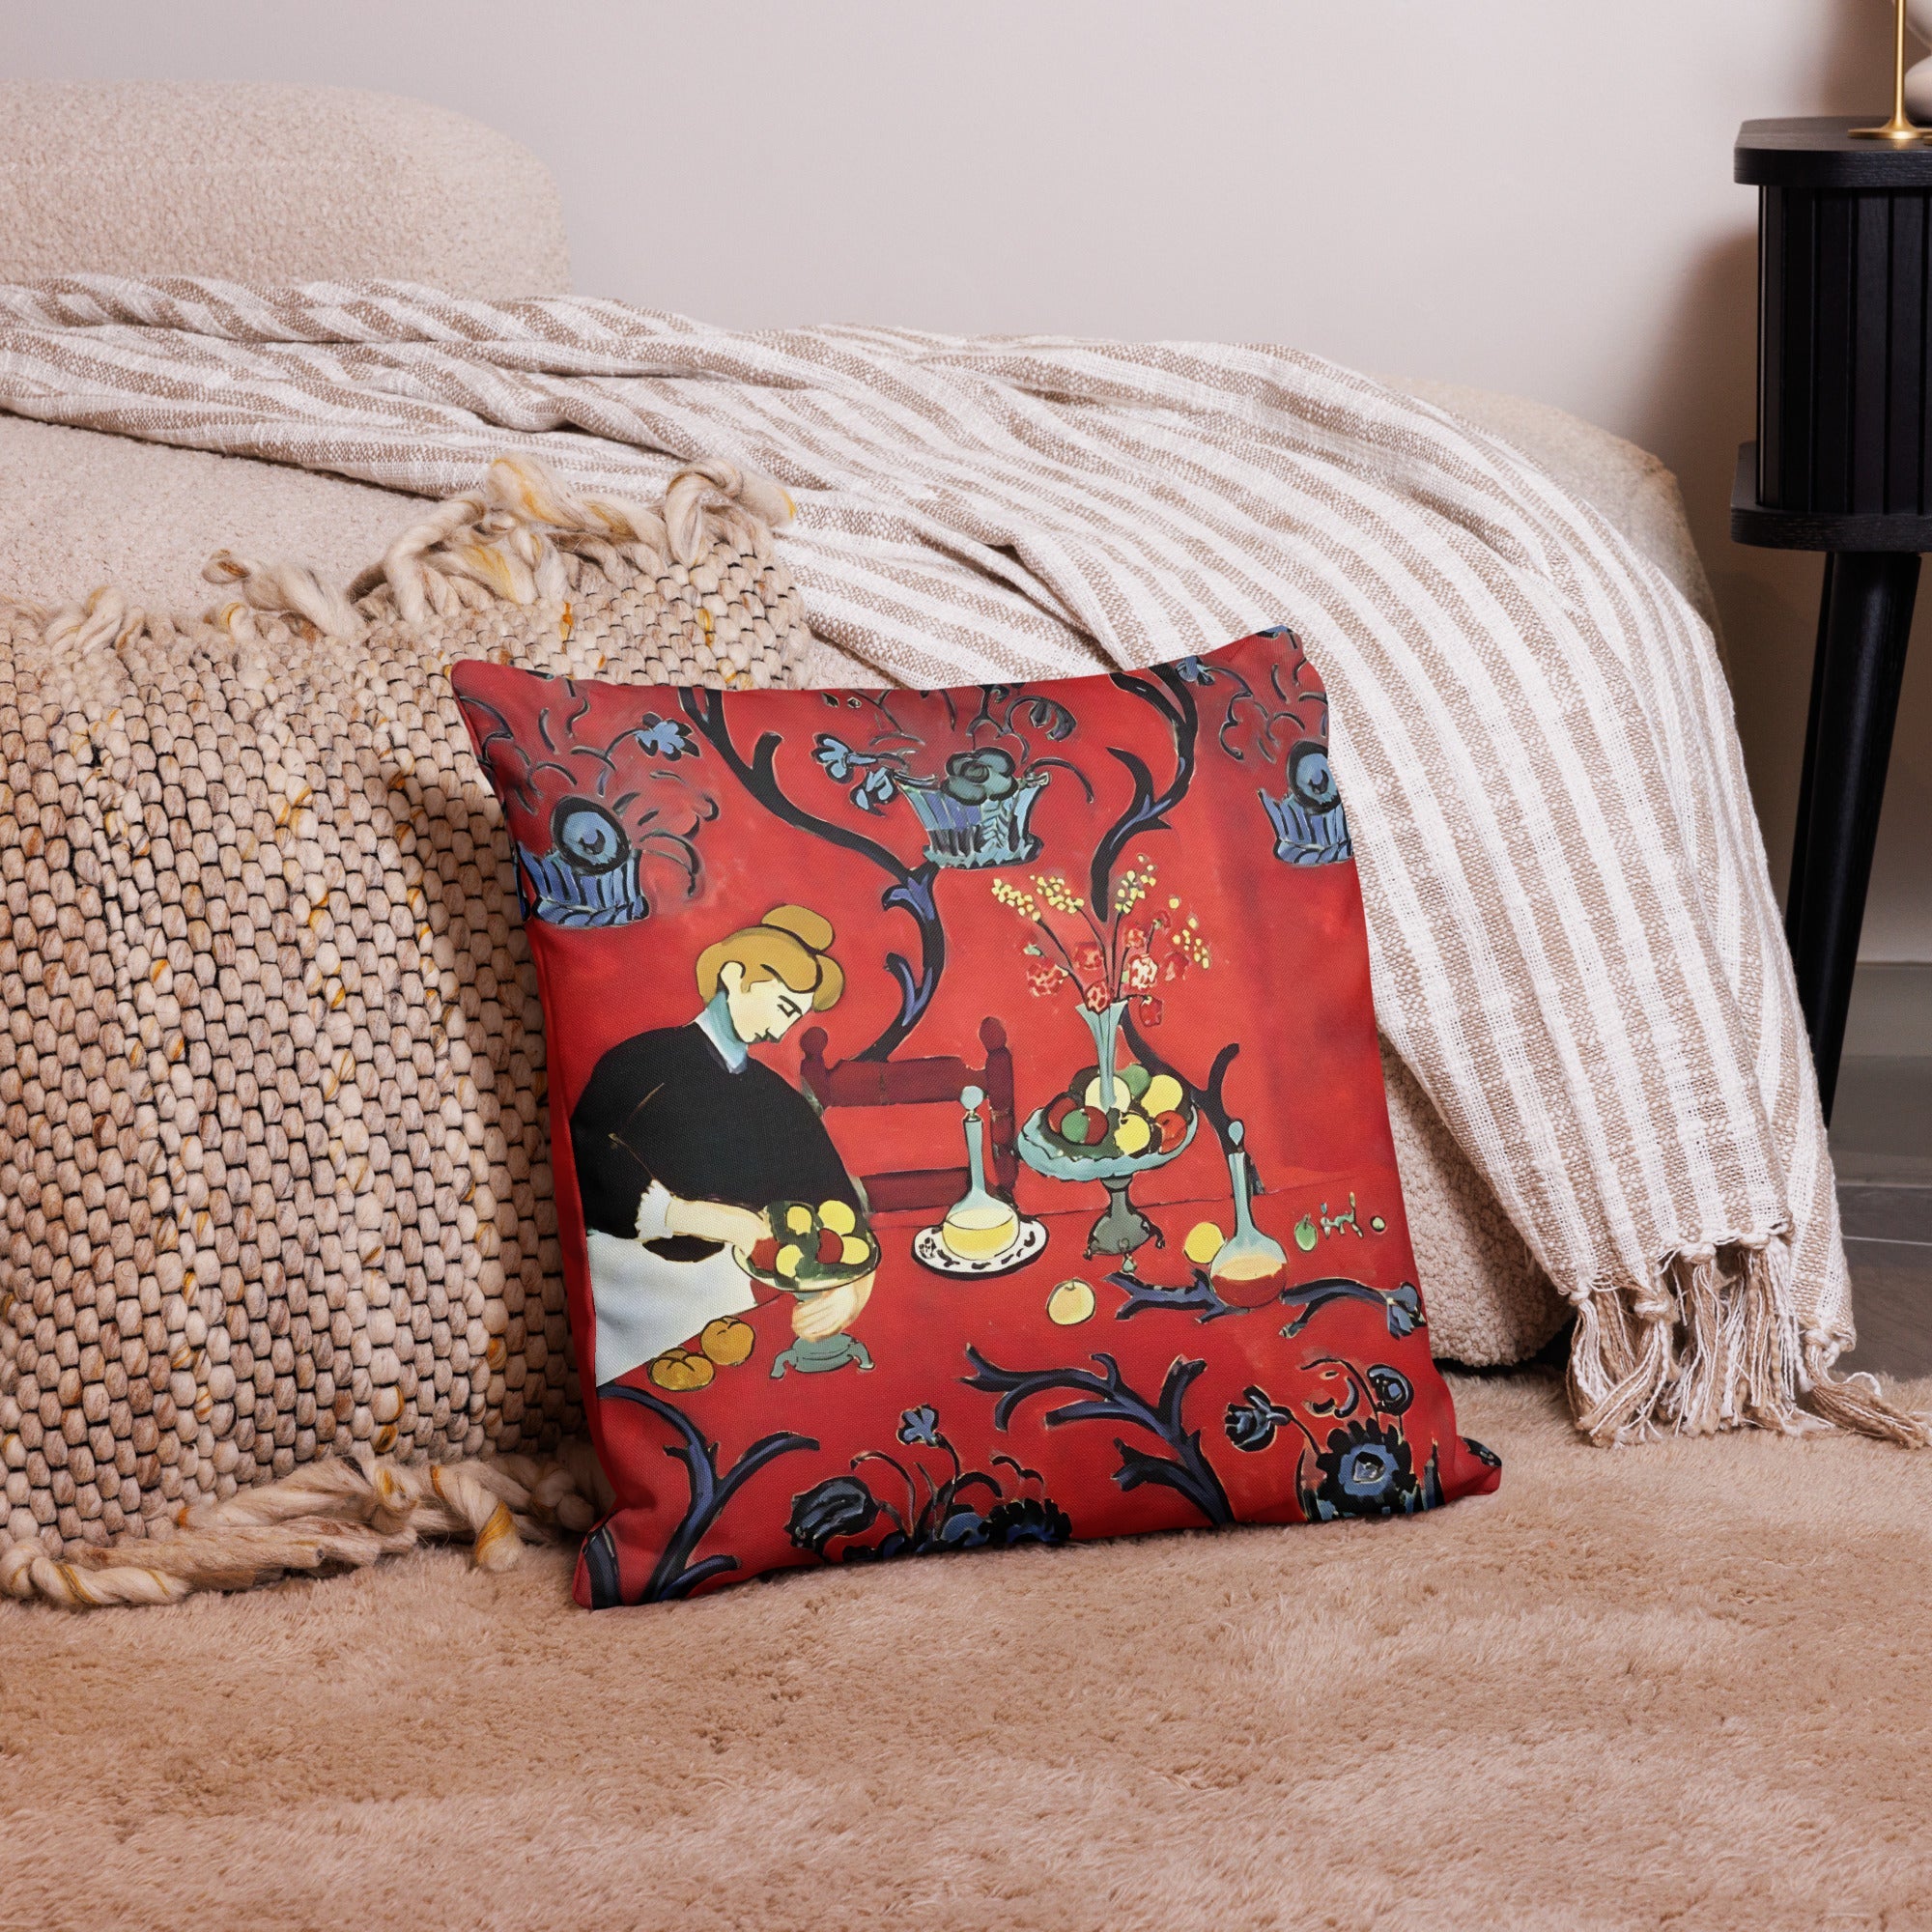 Henri Matisse ‘The Red Room’ Famous Painting Premium Pillow | Premium Art Cushion